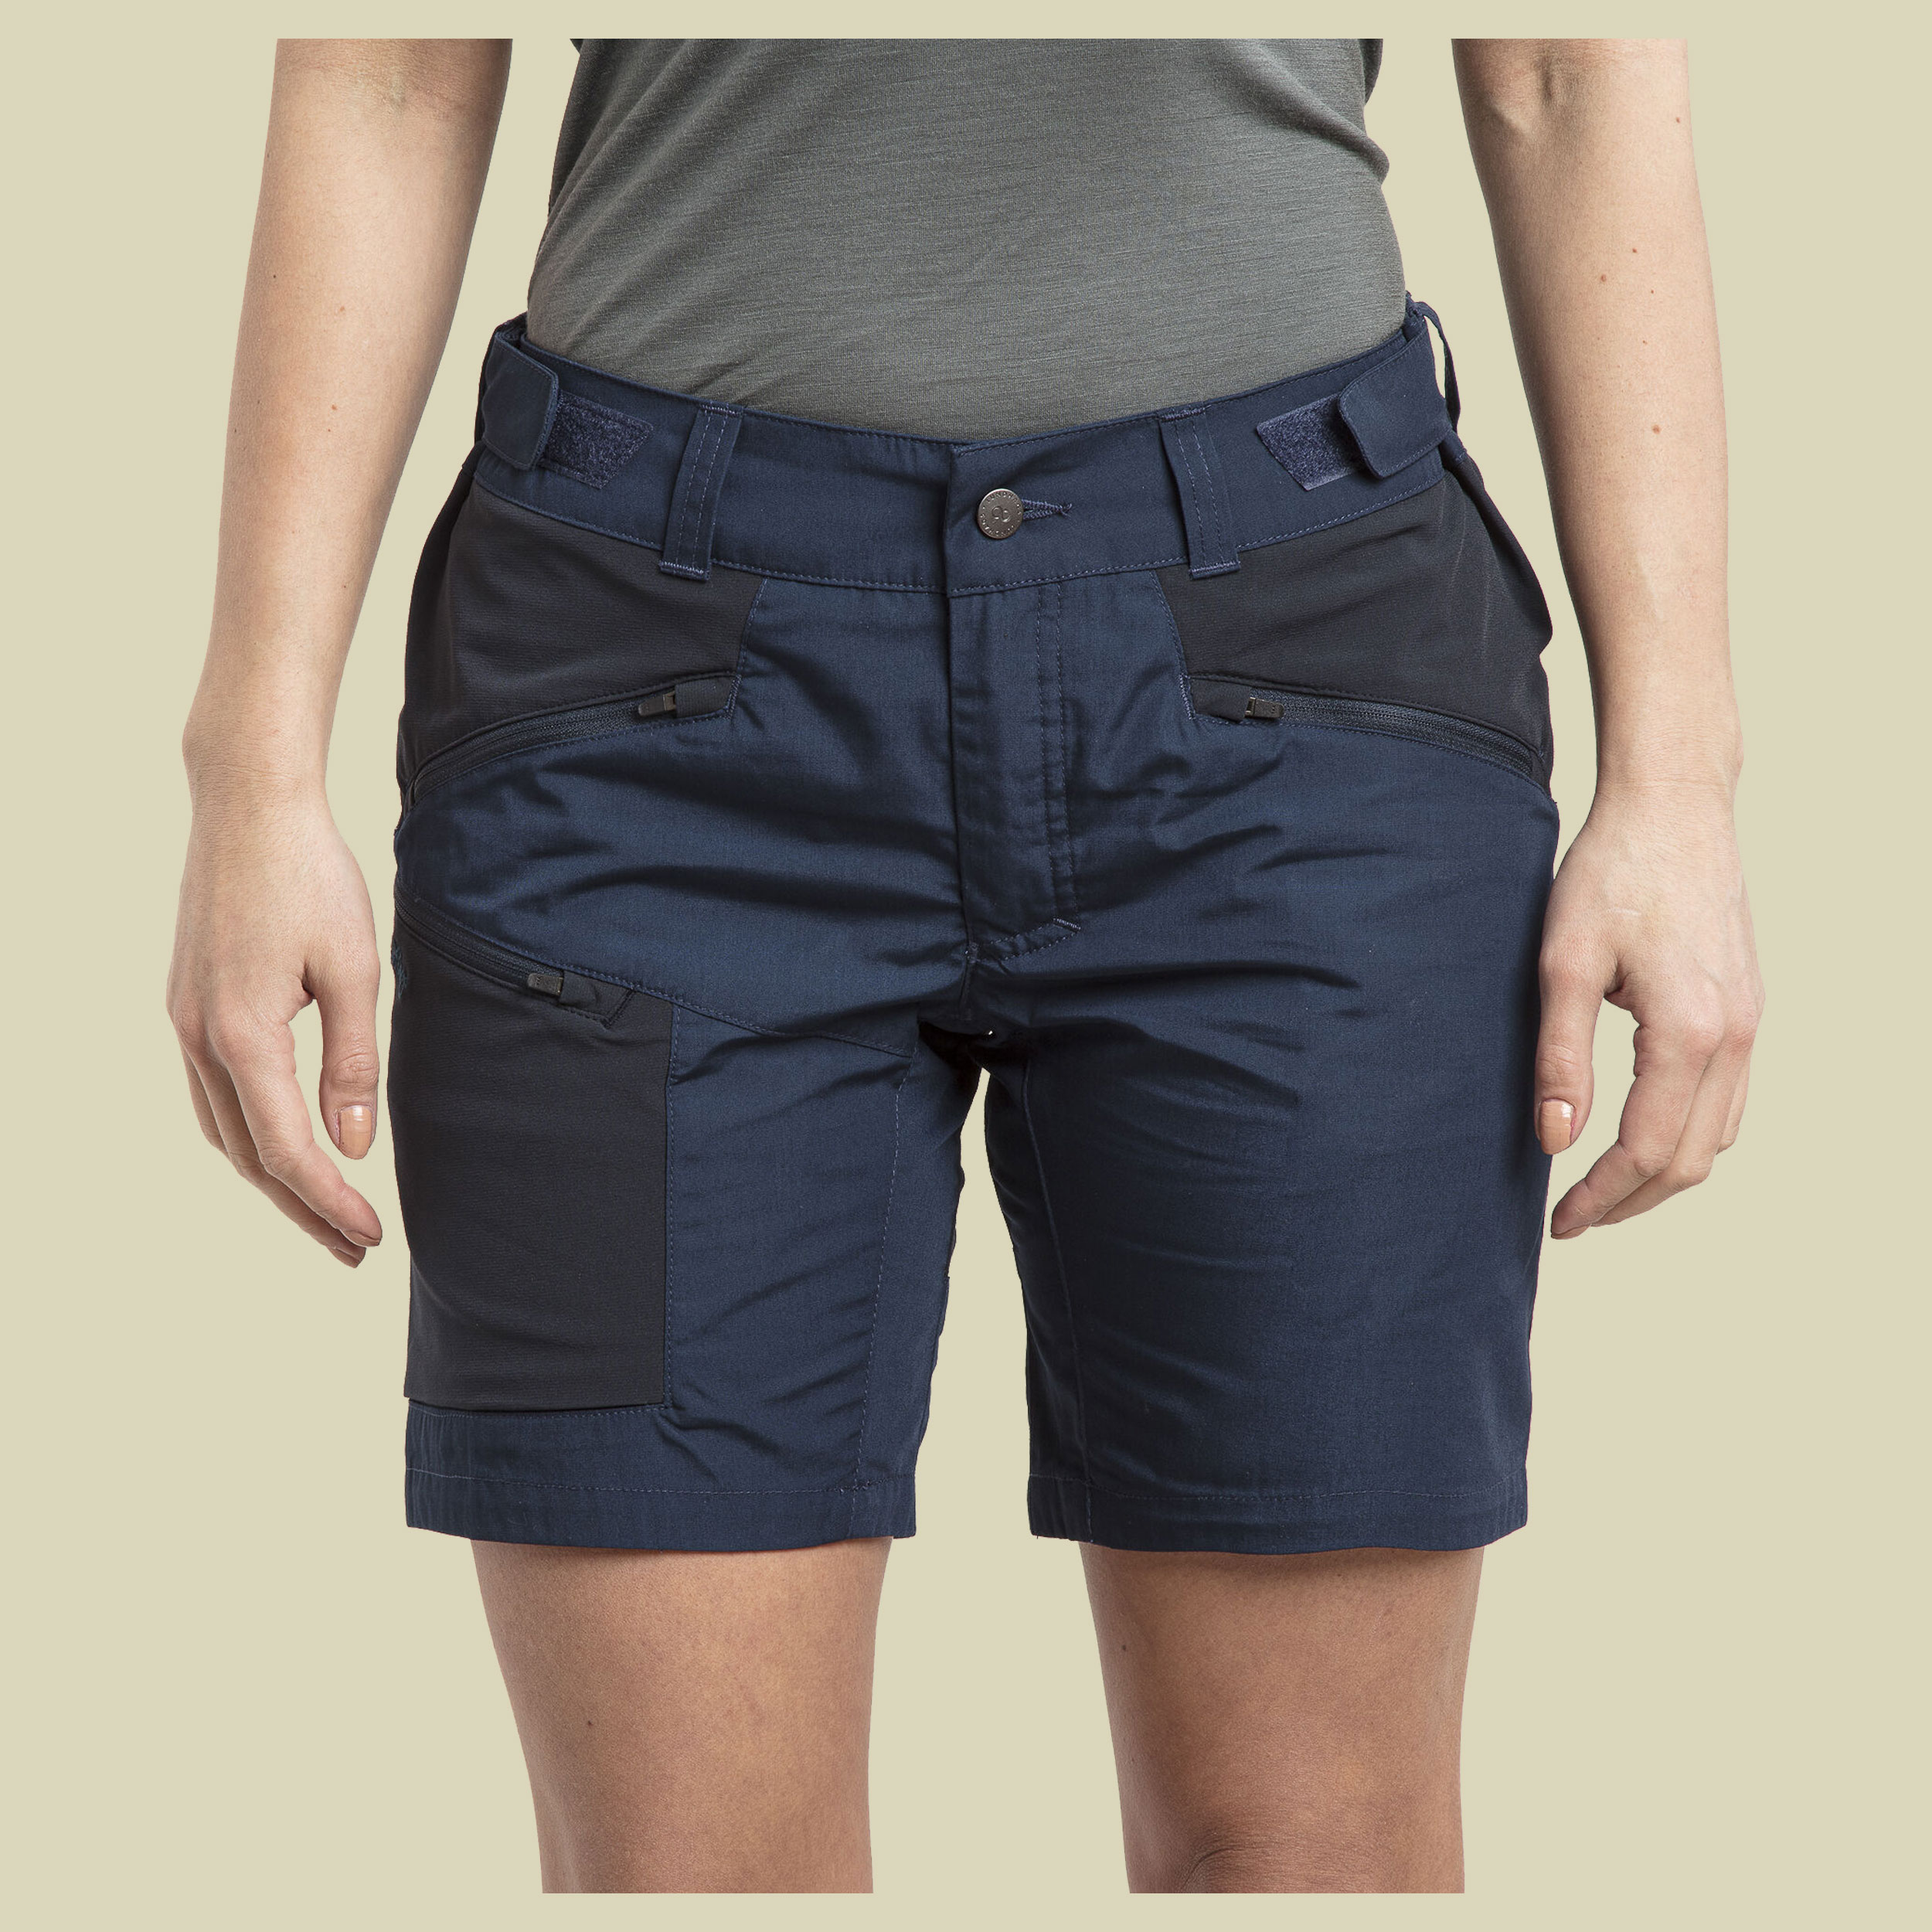 Makke Lt Shorts Women Größe 38 Farbe light navy/deep blue